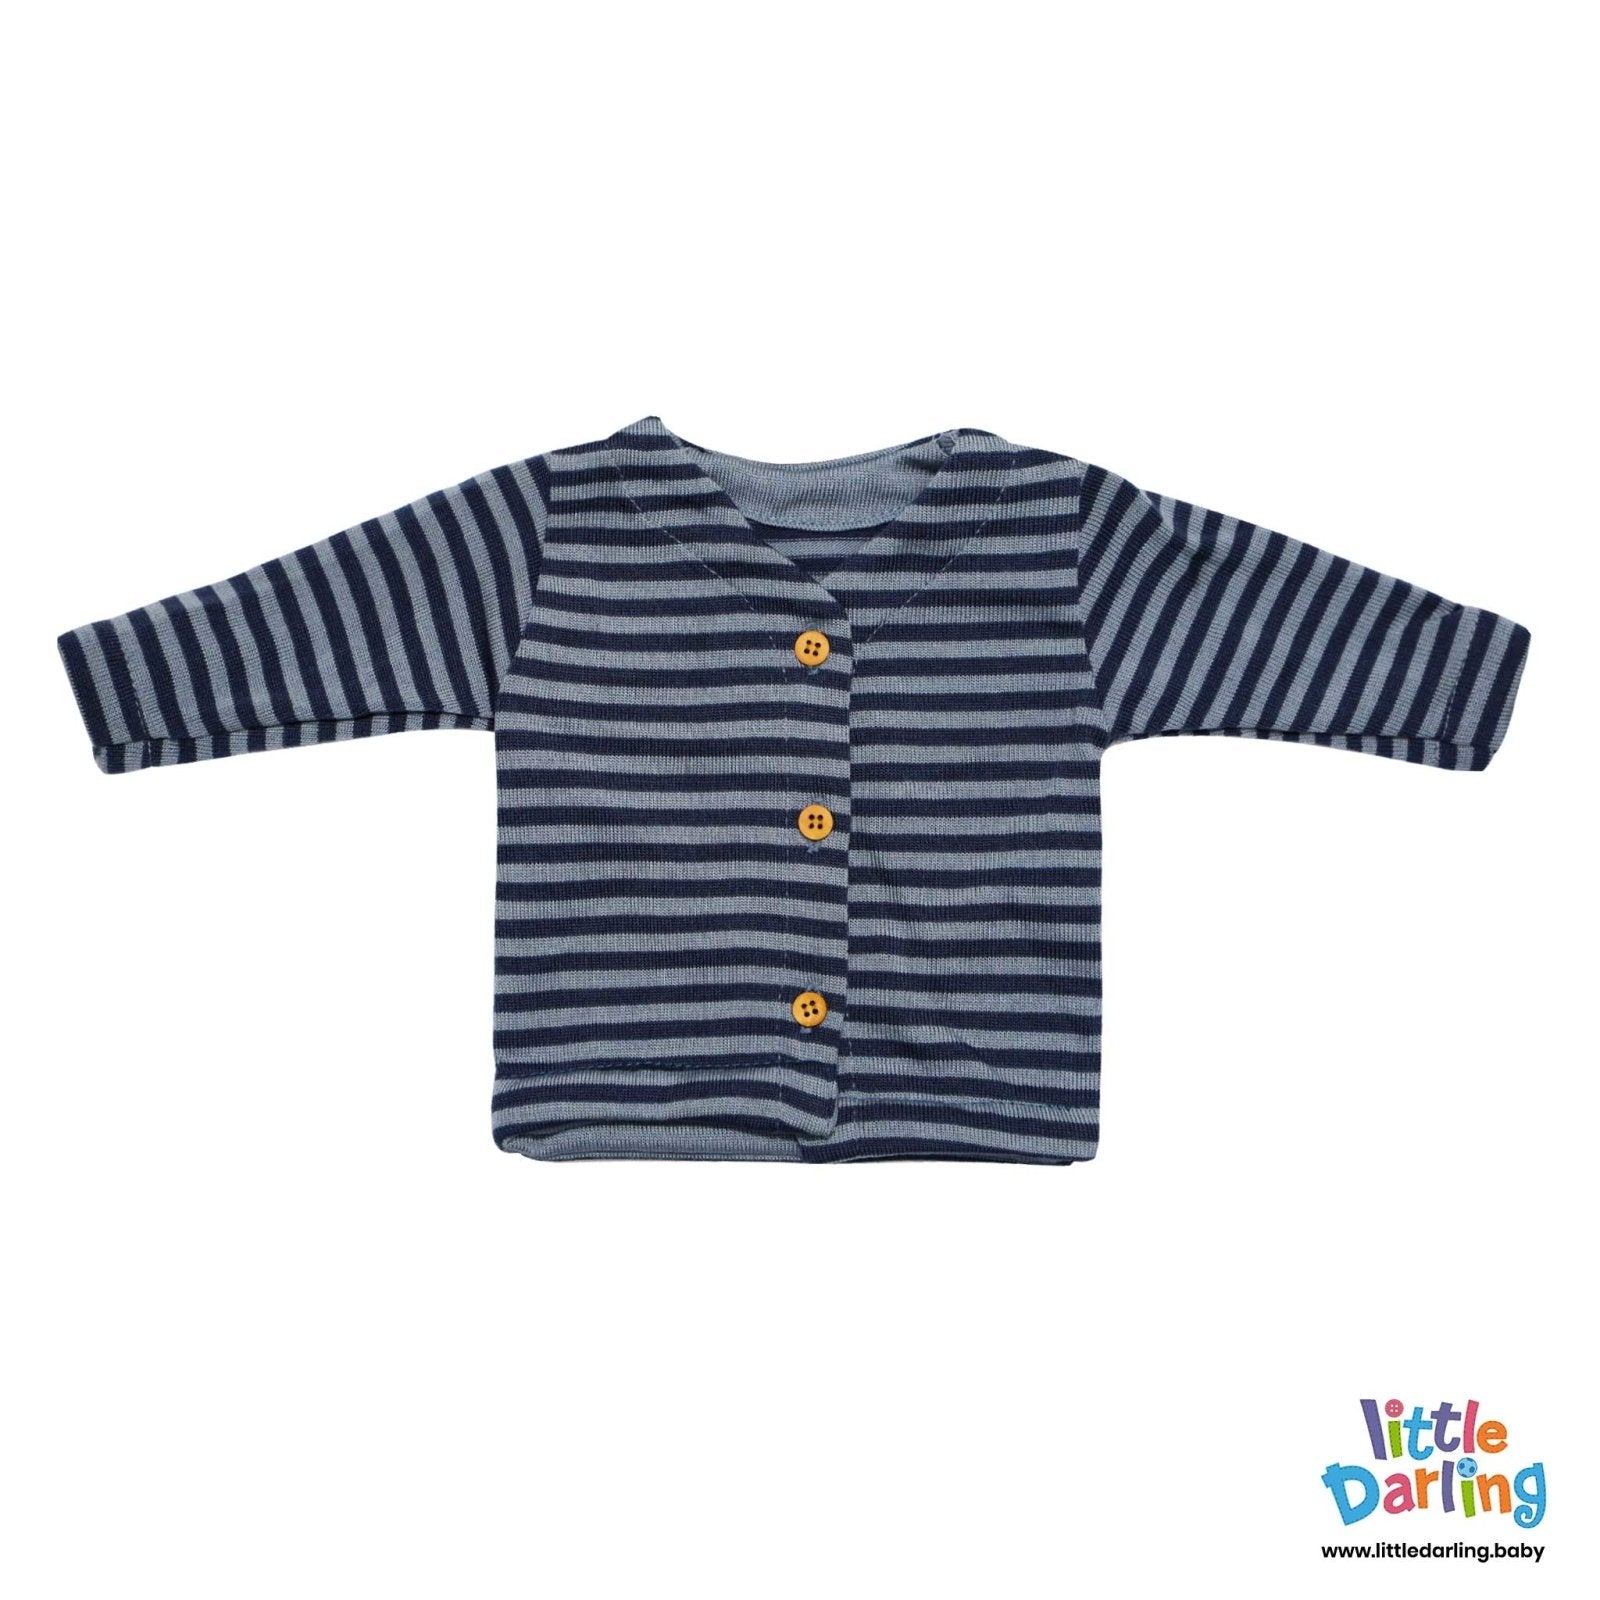 4 Pcs Woolen Gift Set Grey & Navy Blue Stripes by Little Darling